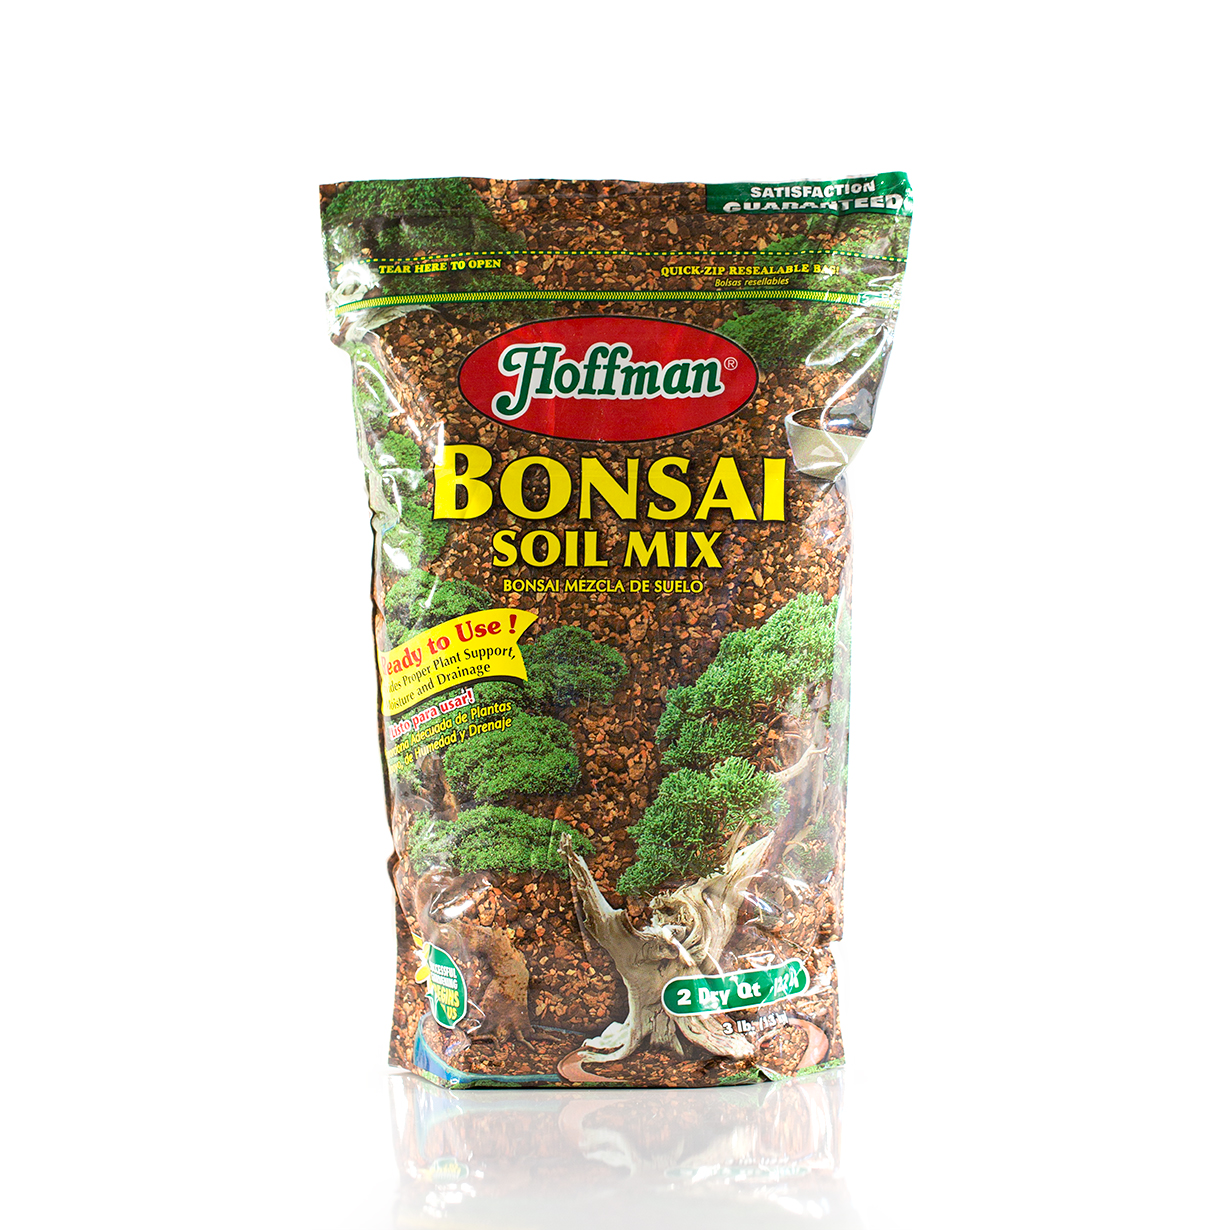 Hoffman® Bonsai Soil Mix, 2 Quart Bag